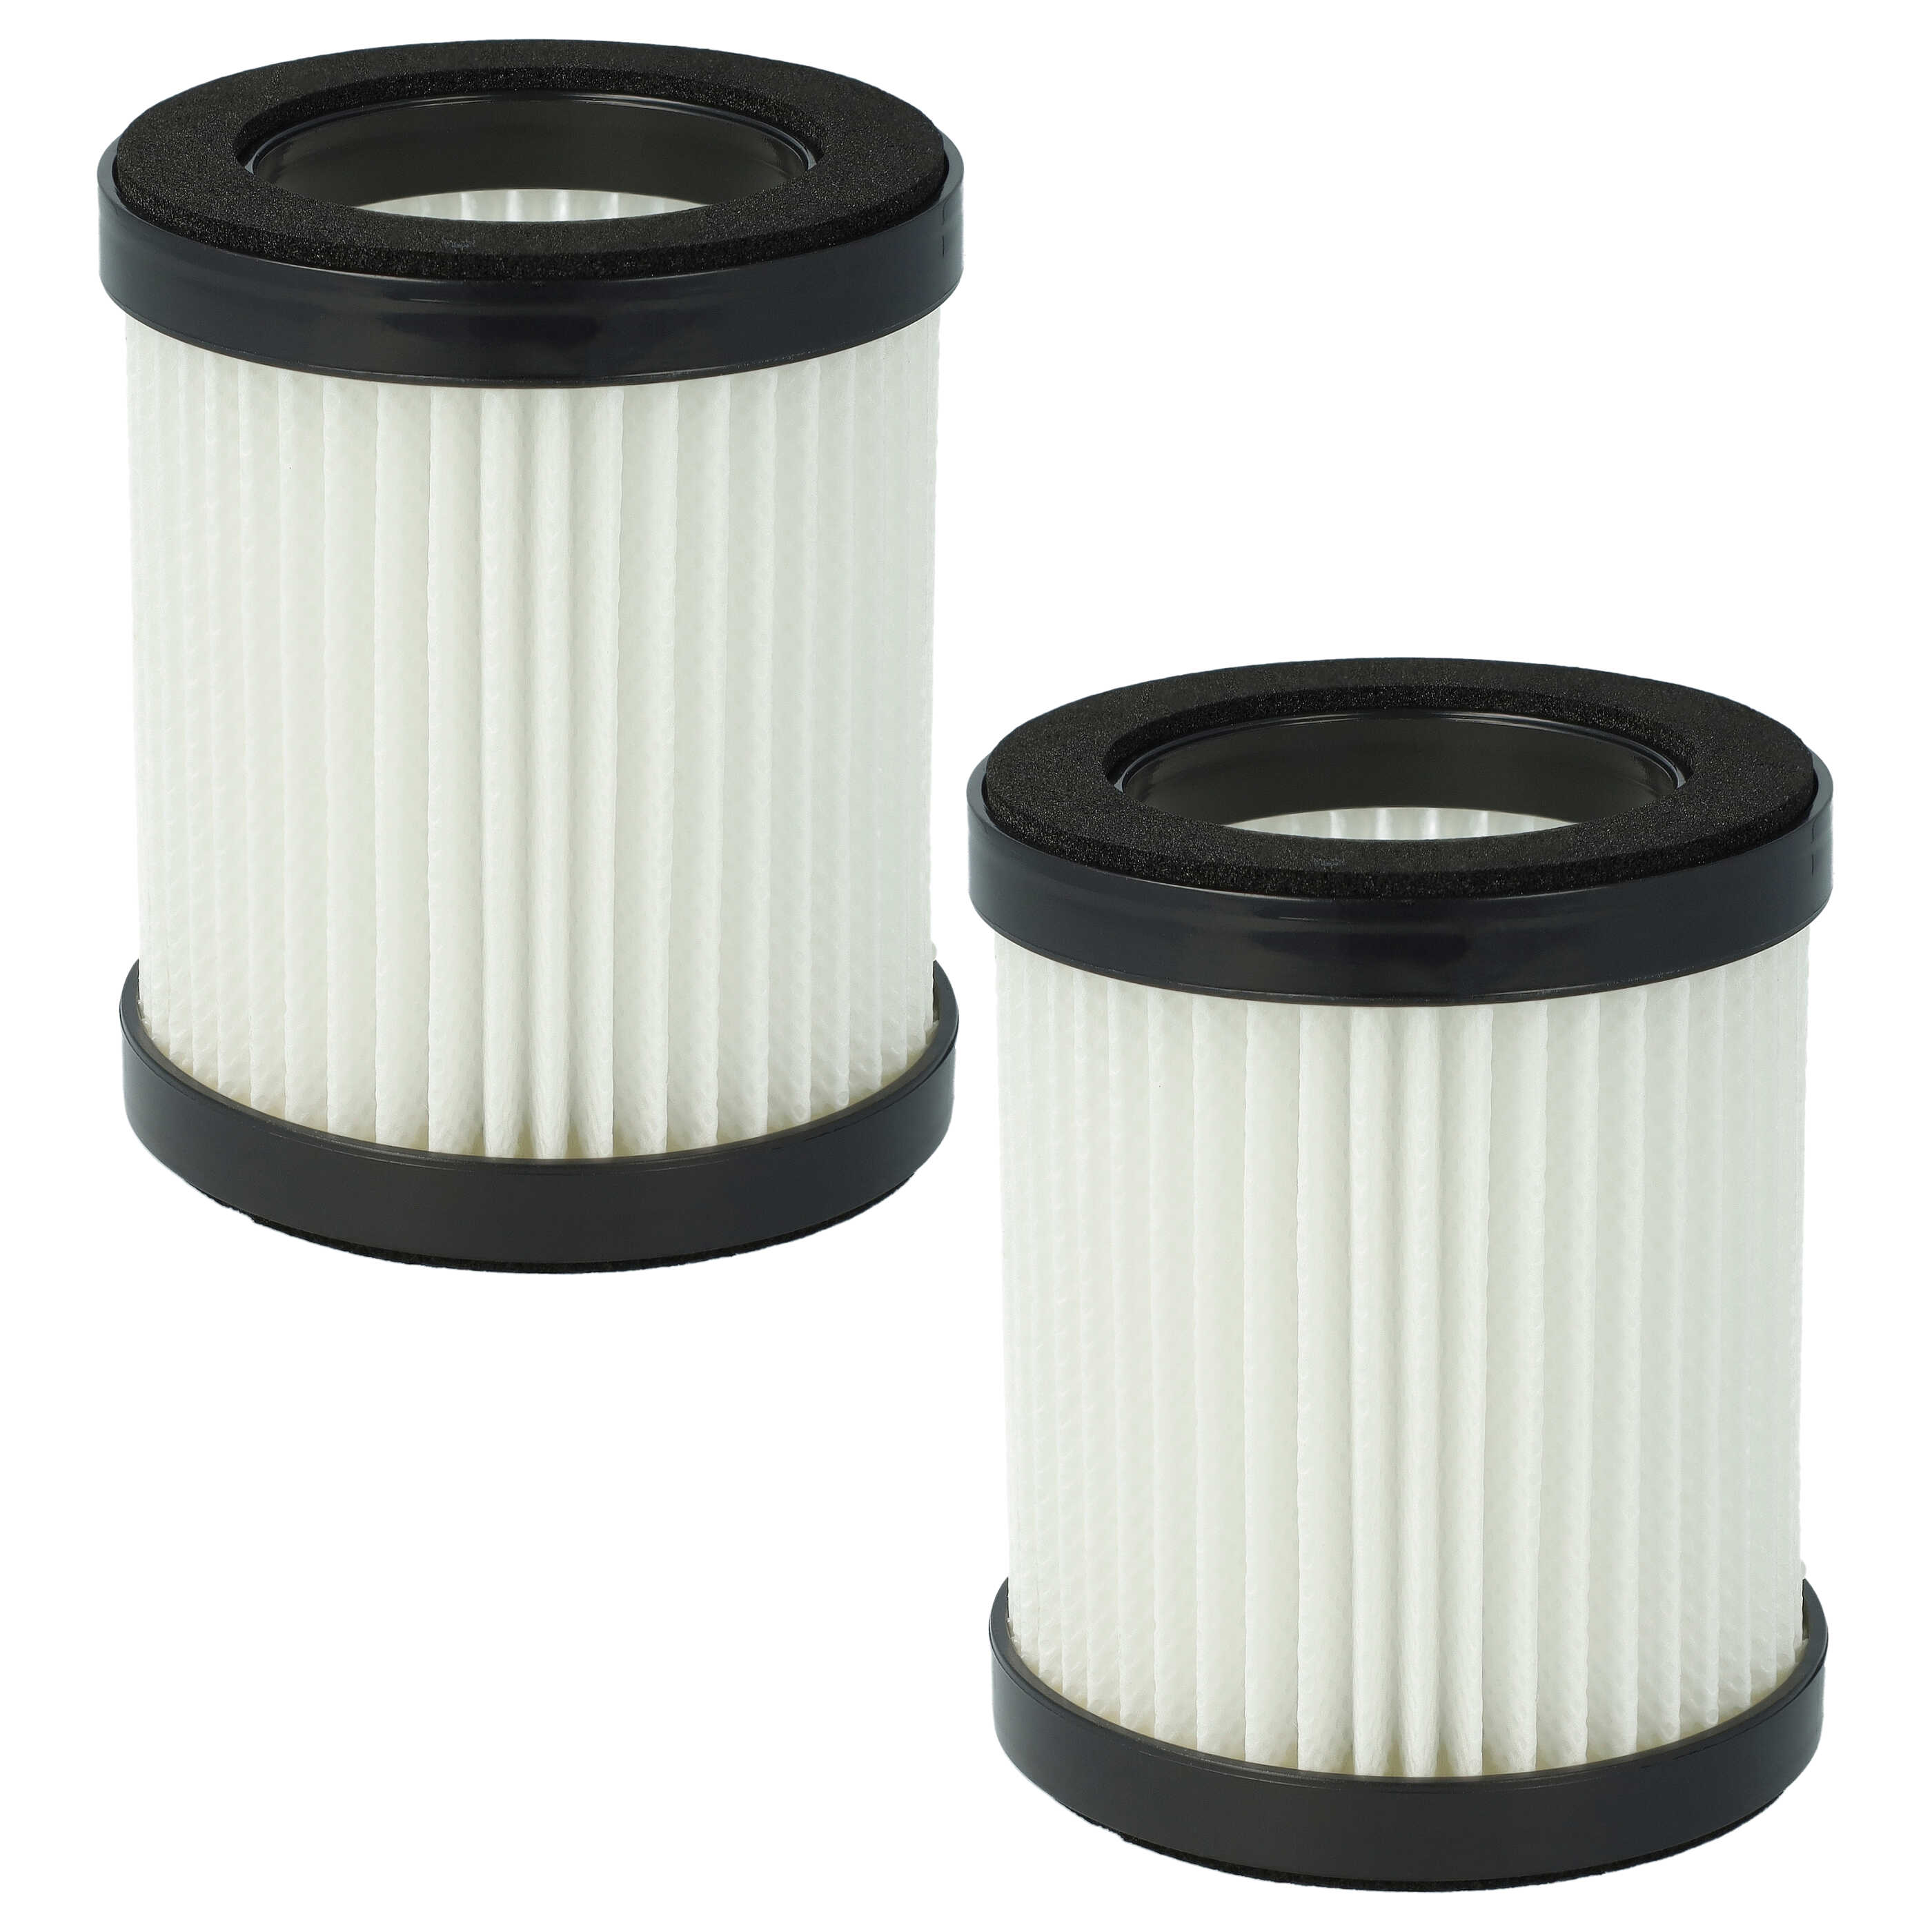 2x Filtro para aspiradora XL-618A Moosoo, Beldray XL-618A - filtro